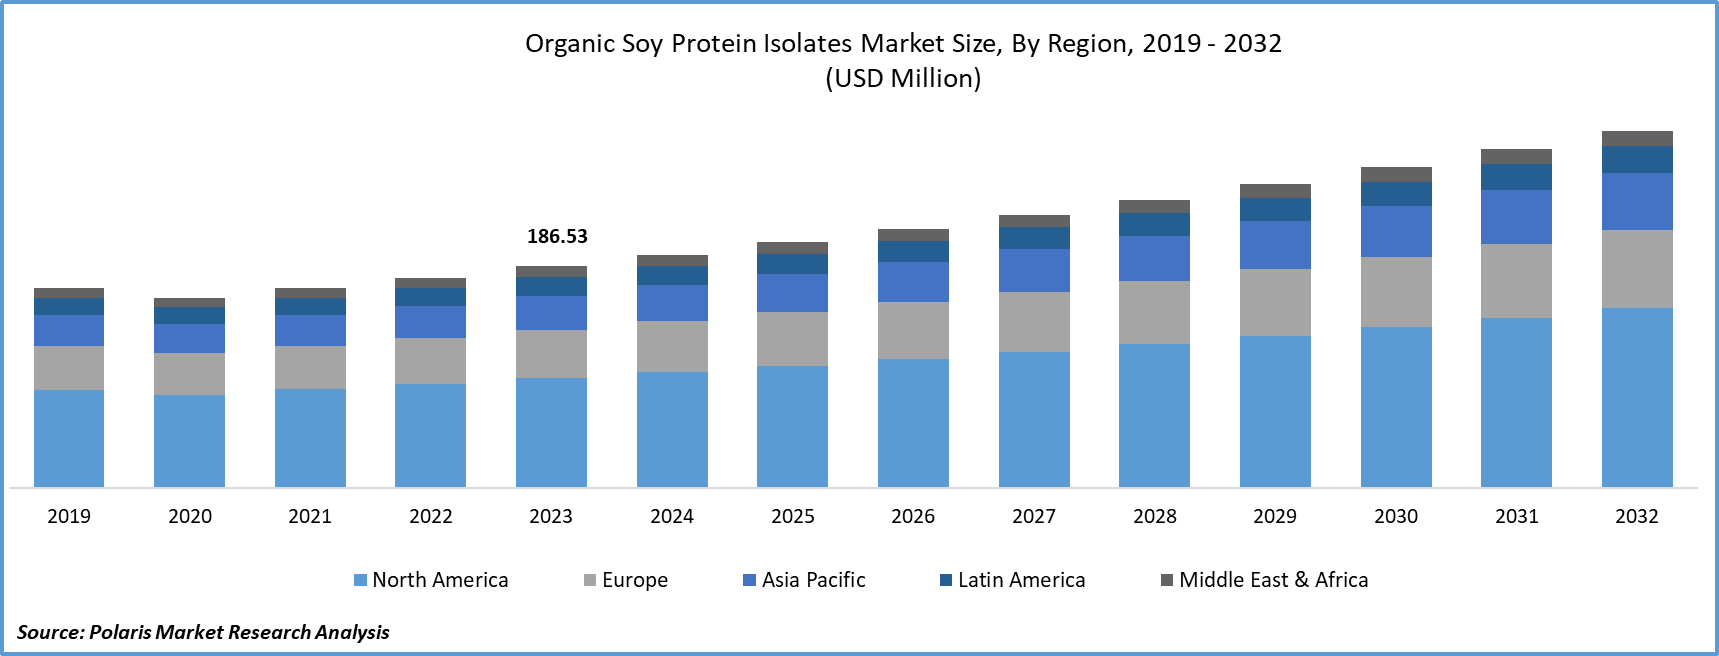 Organic Soy Protein Isolates Market Size